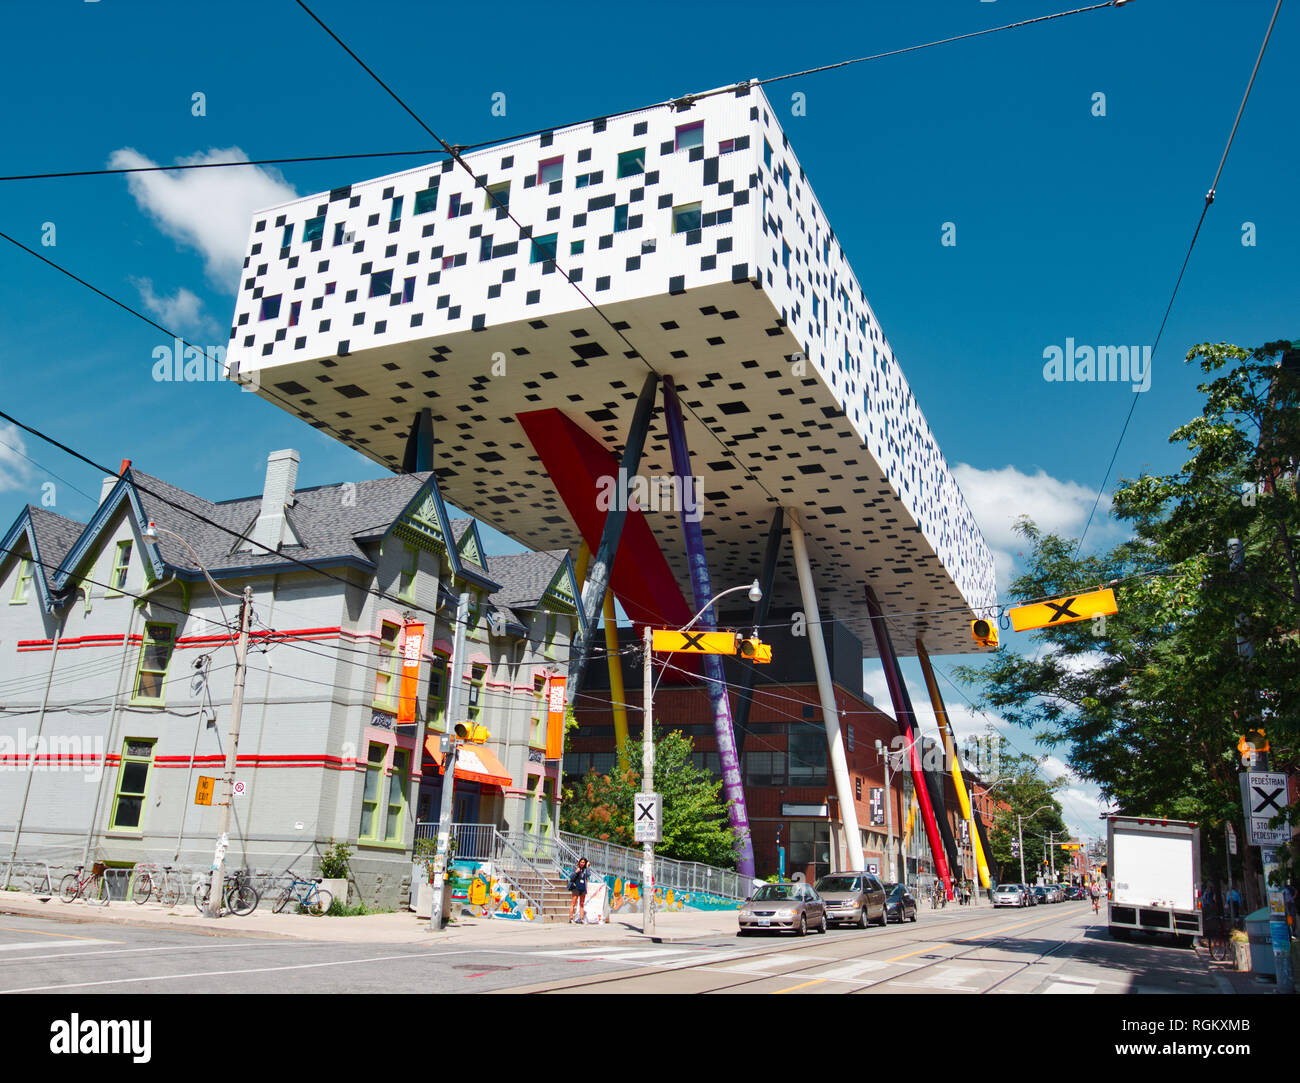 The Sharp Centre for Design an award winning extension to OCAD University, Grange Park, Toronto, Ontario, Canada Stock Photo